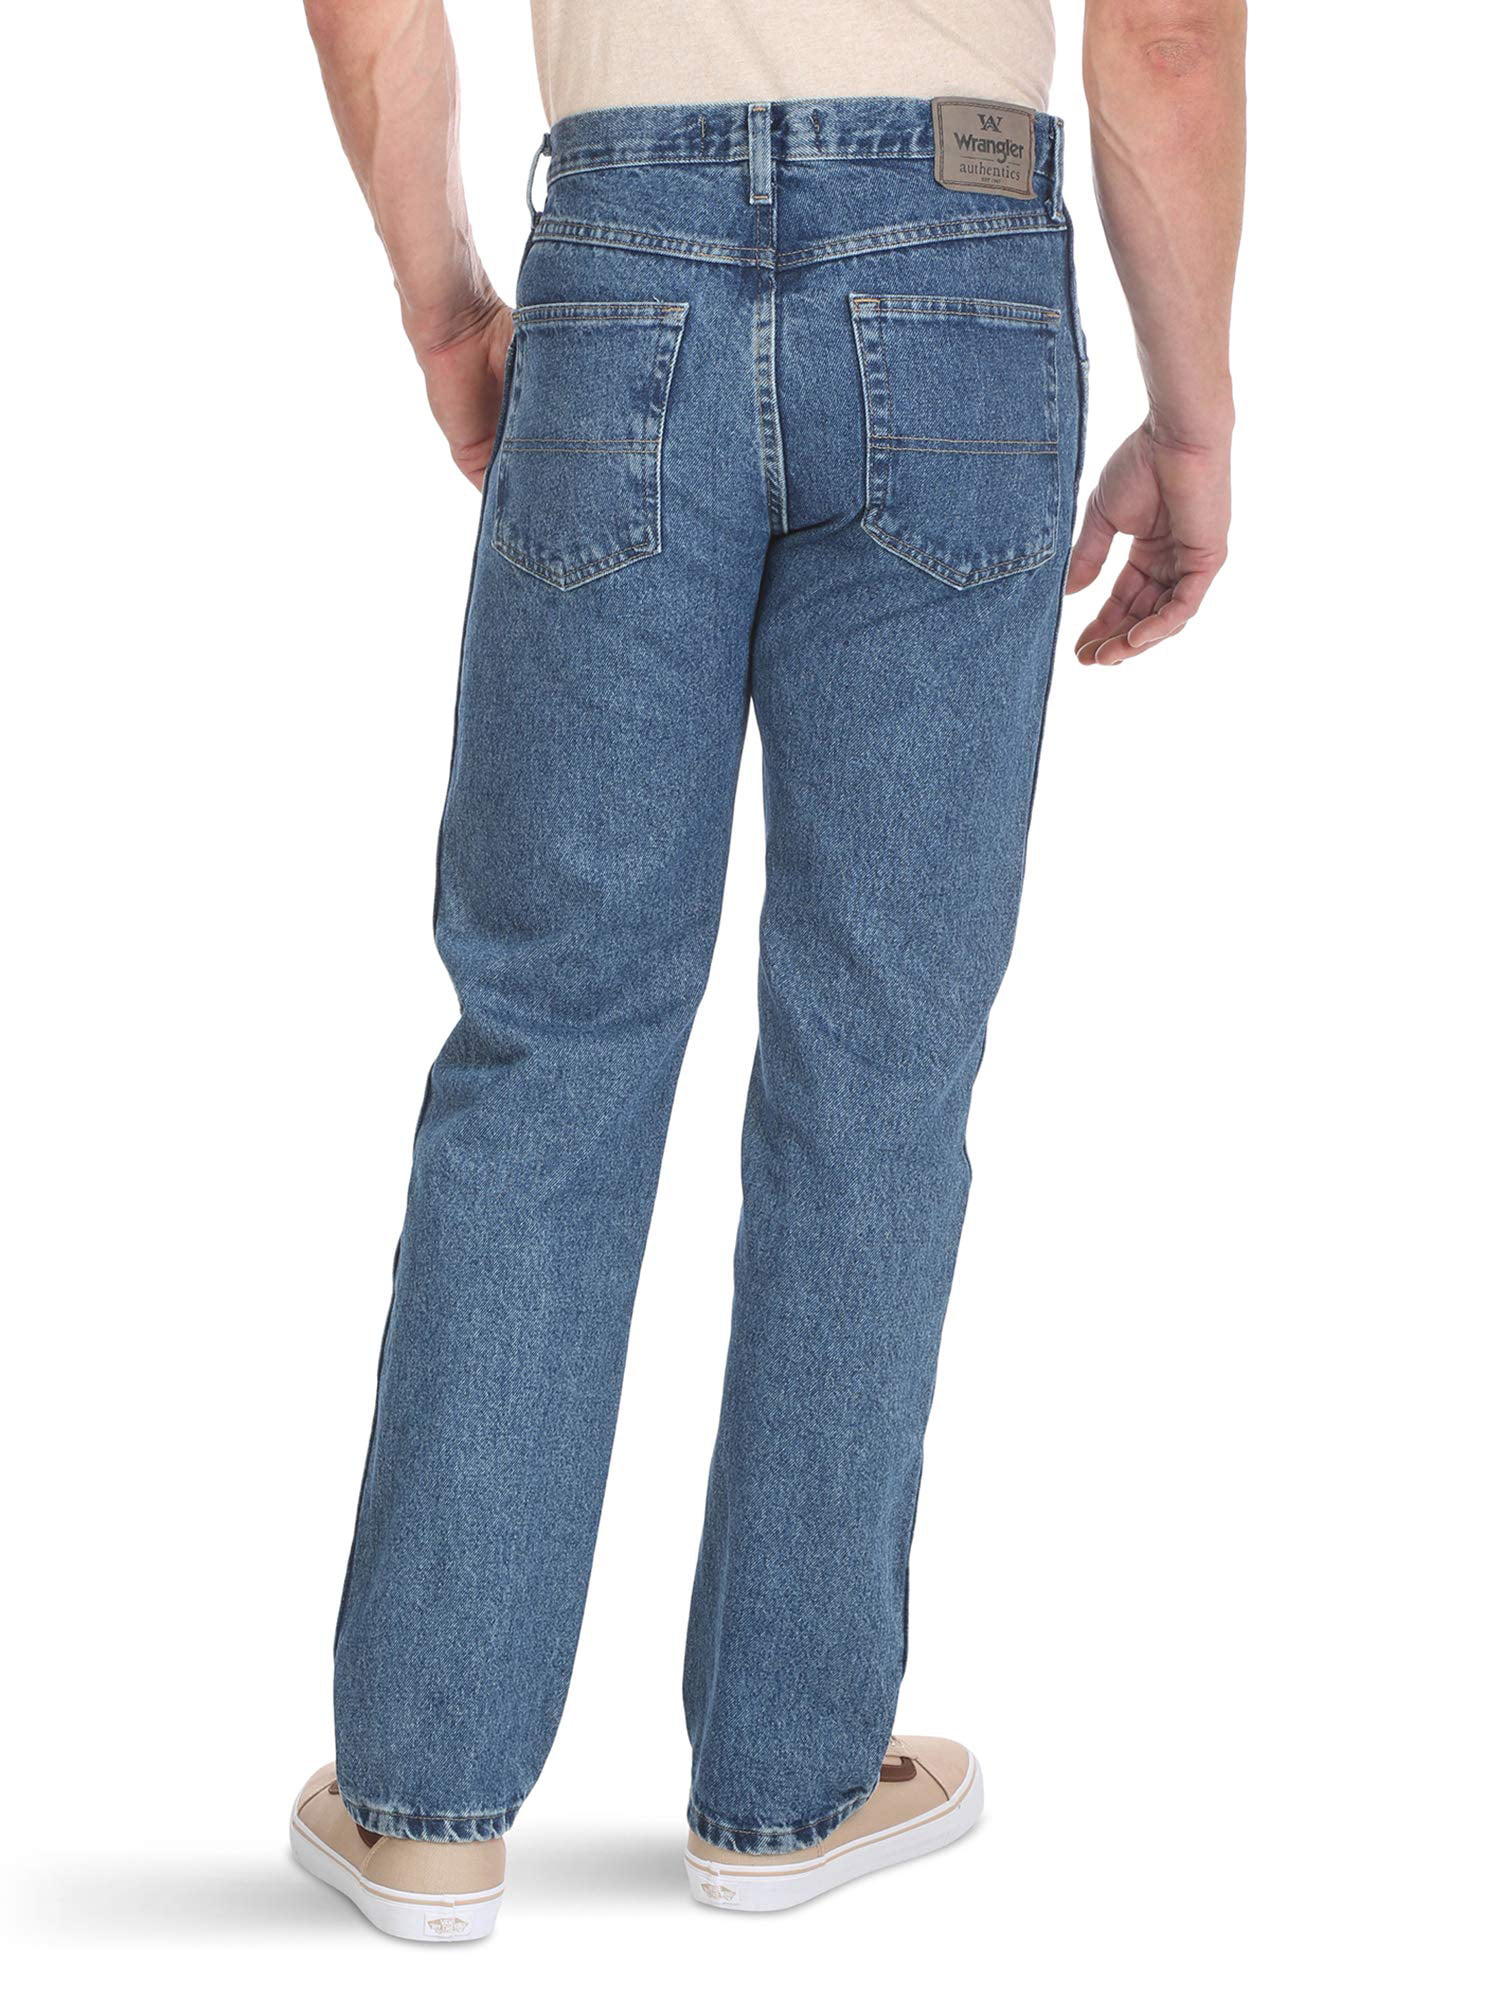 wrangler flex fit jeans walmart